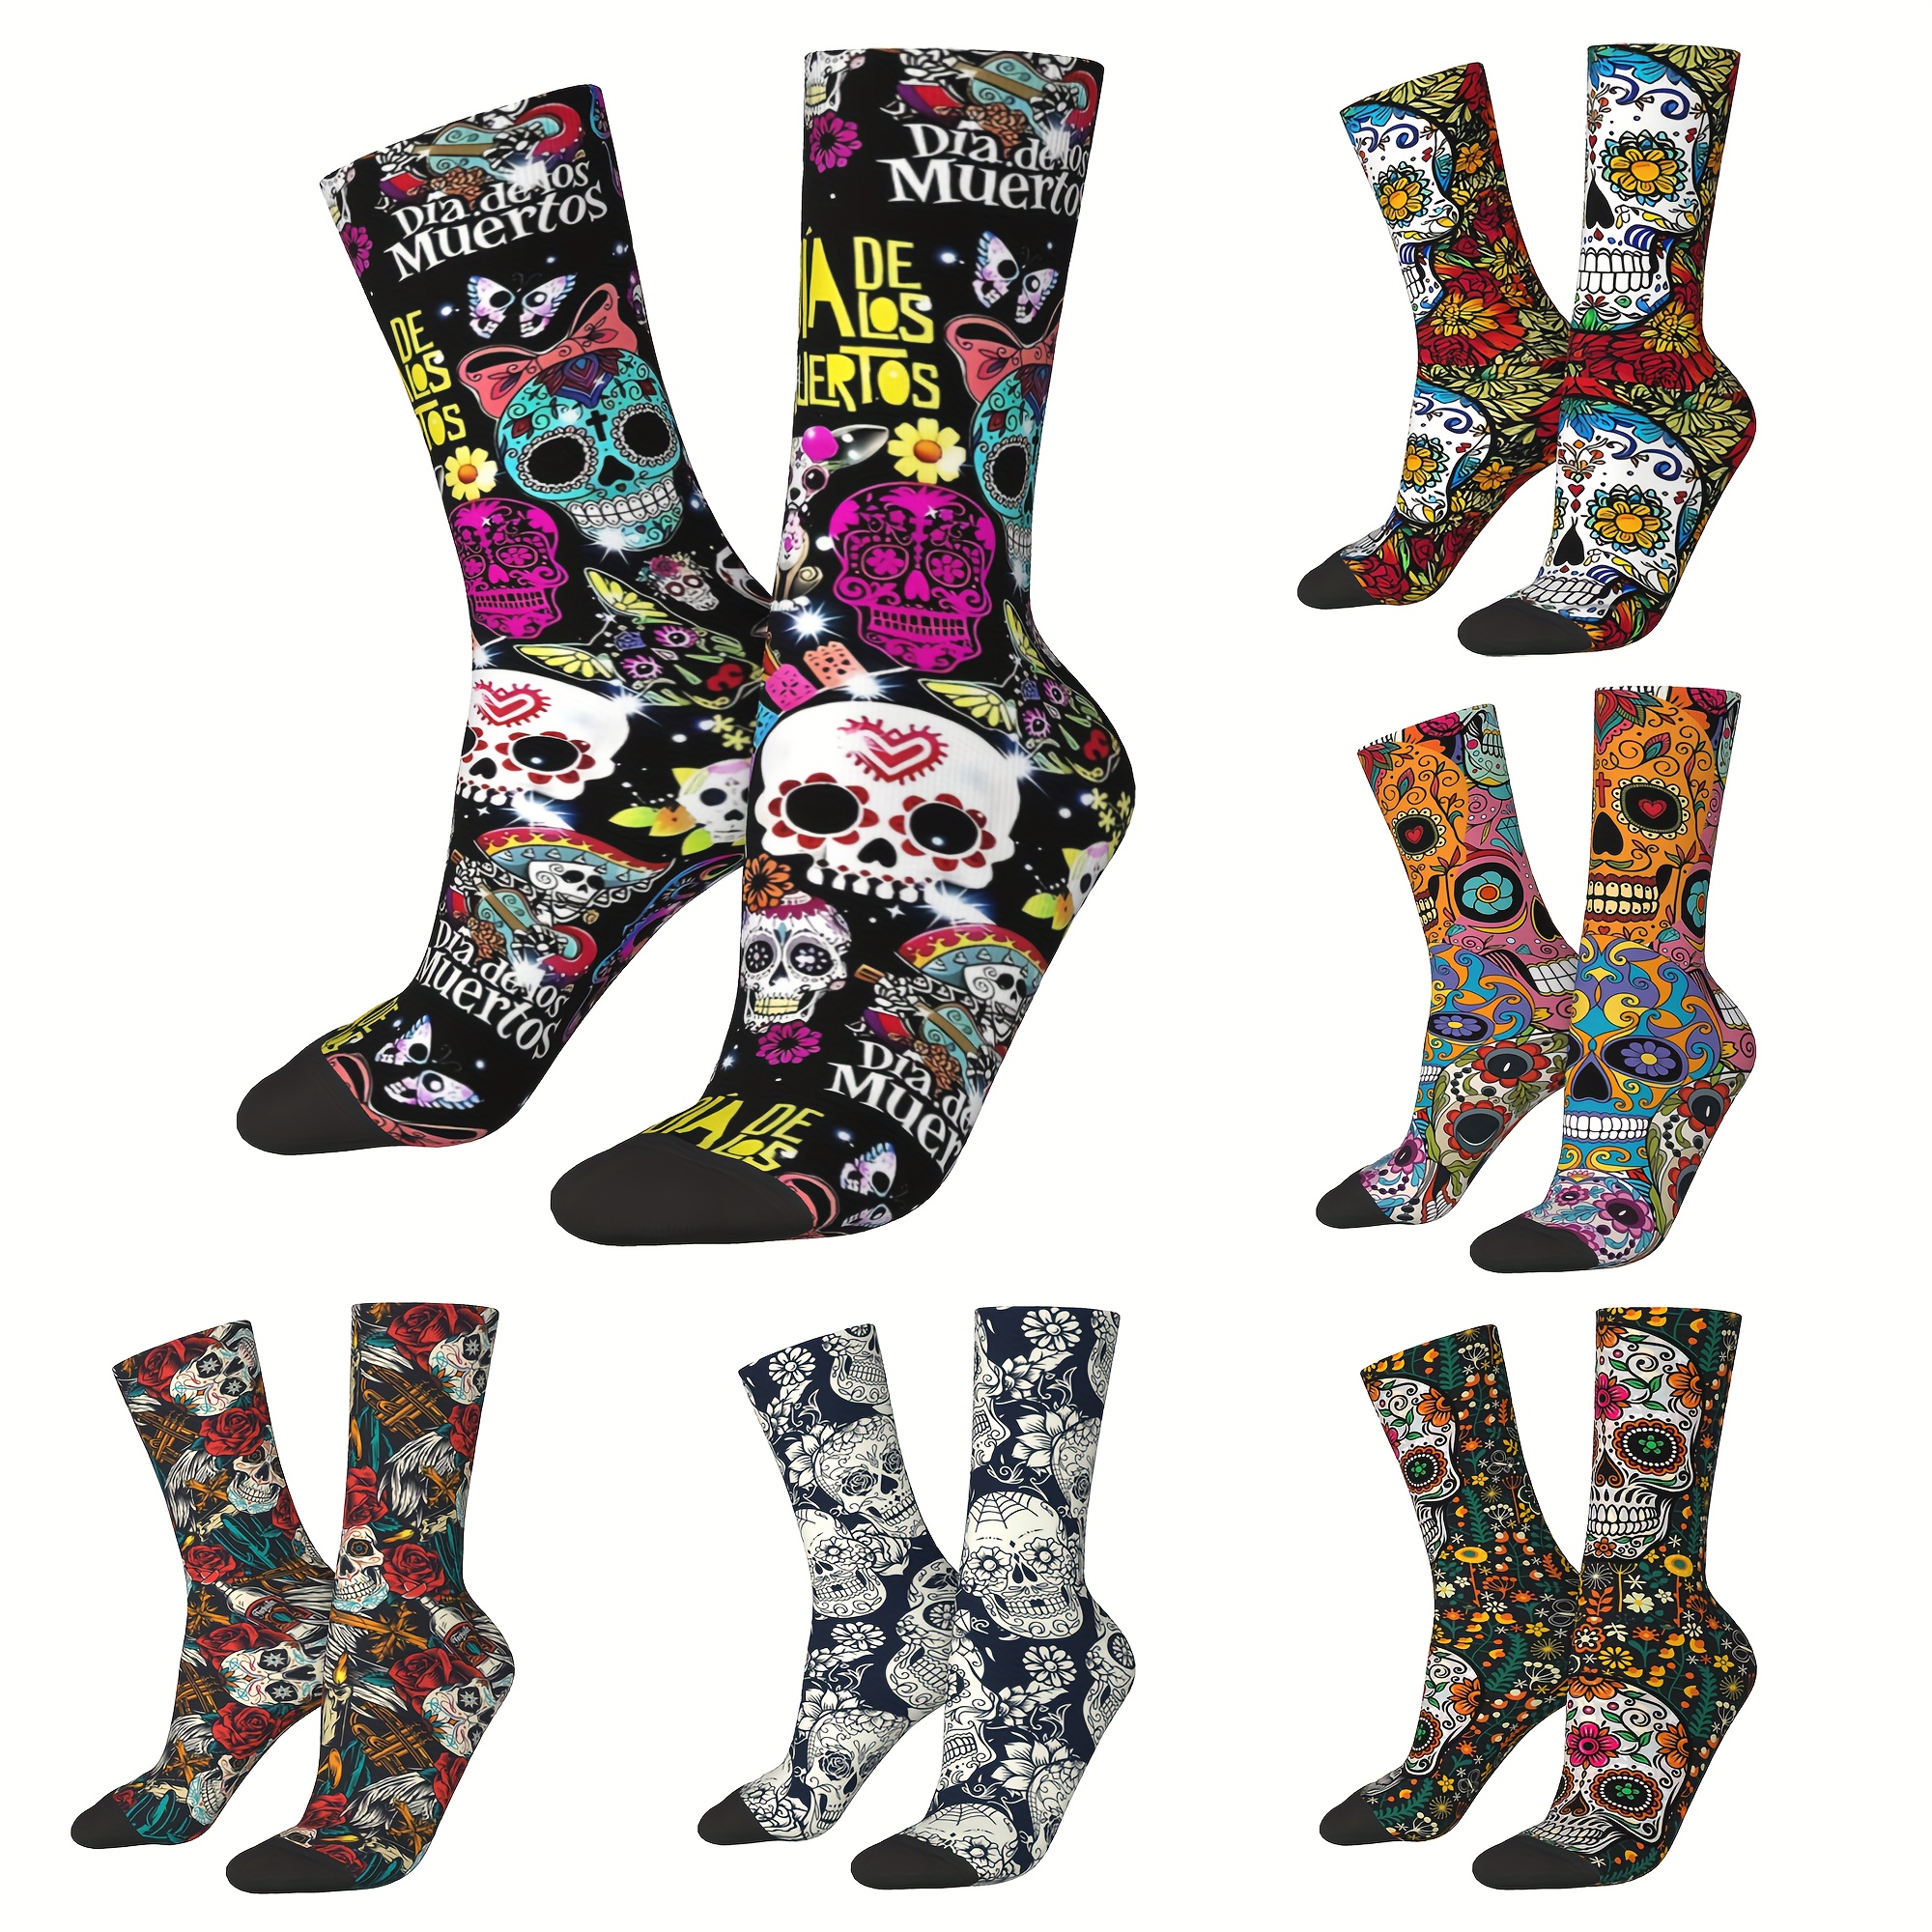 

1 Pair Of Men's Novelty Graffiti Pattern Crew Socks, Breathable Comfy Casual Unisex Socks For Men's Outdoor Wearing All Seasons Wearing